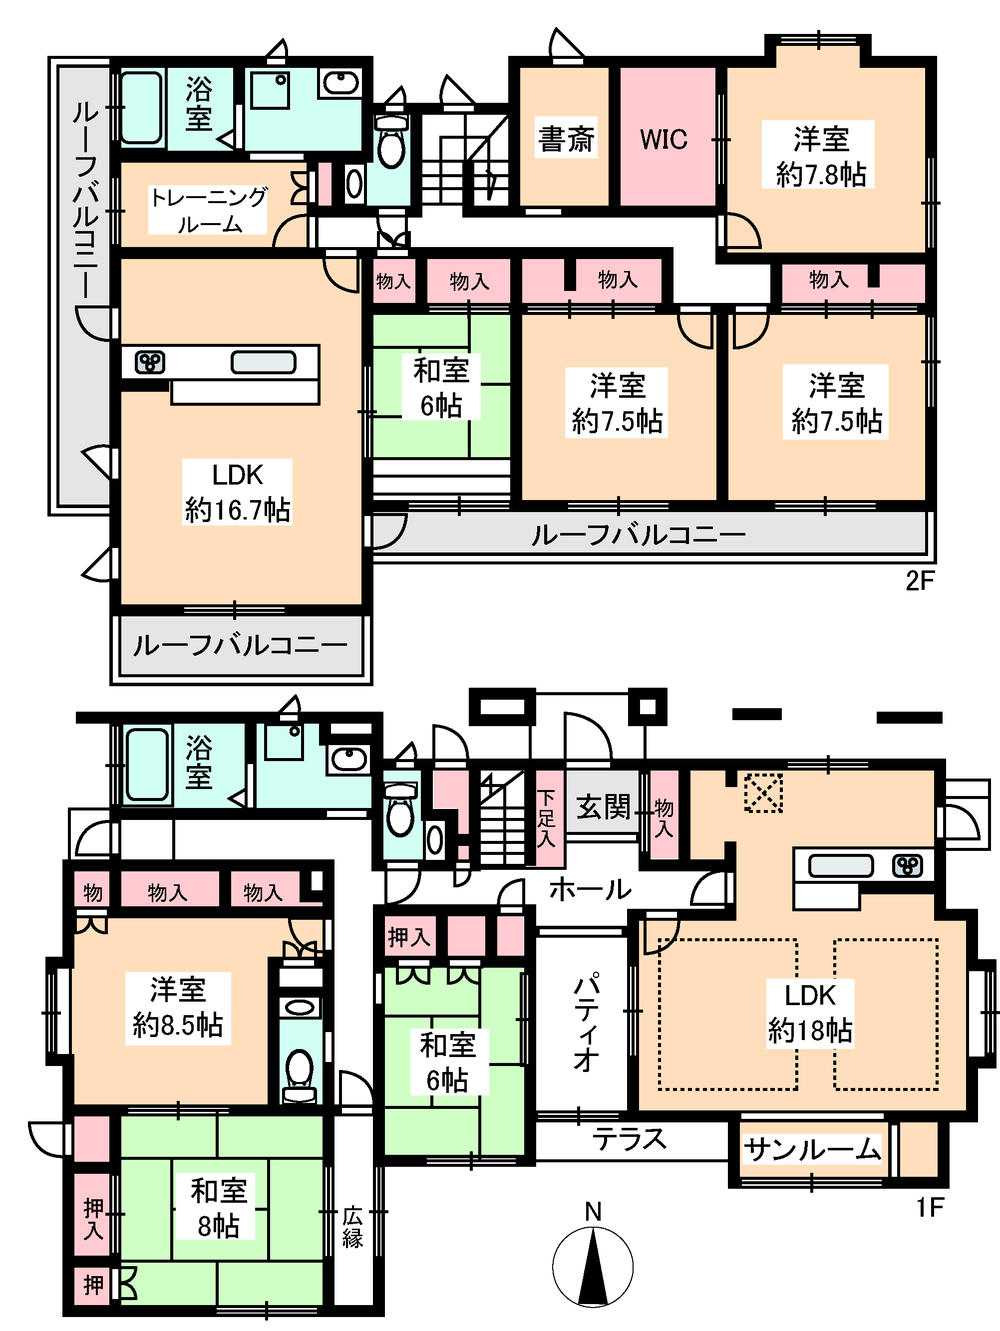 Floor plan. 138 million yen, 7LDK + S (storeroom), Land area 633.21 sq m , Building area 255.05 sq m